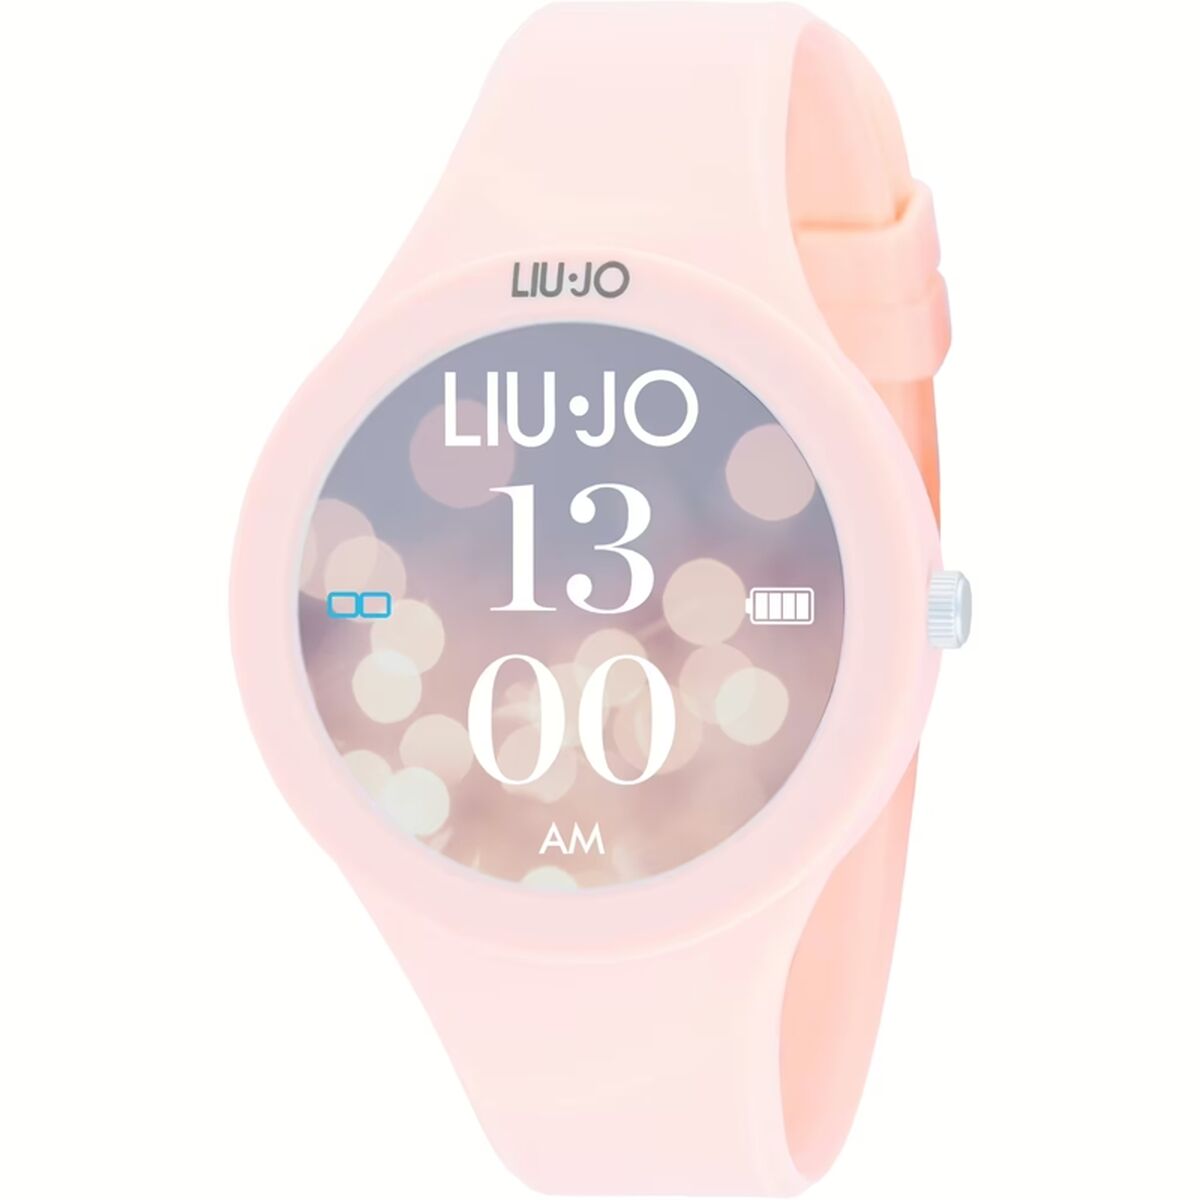 Kaufe Smartwatch LIU JO SWLJ126 bei AWK Flagship um € 112.00